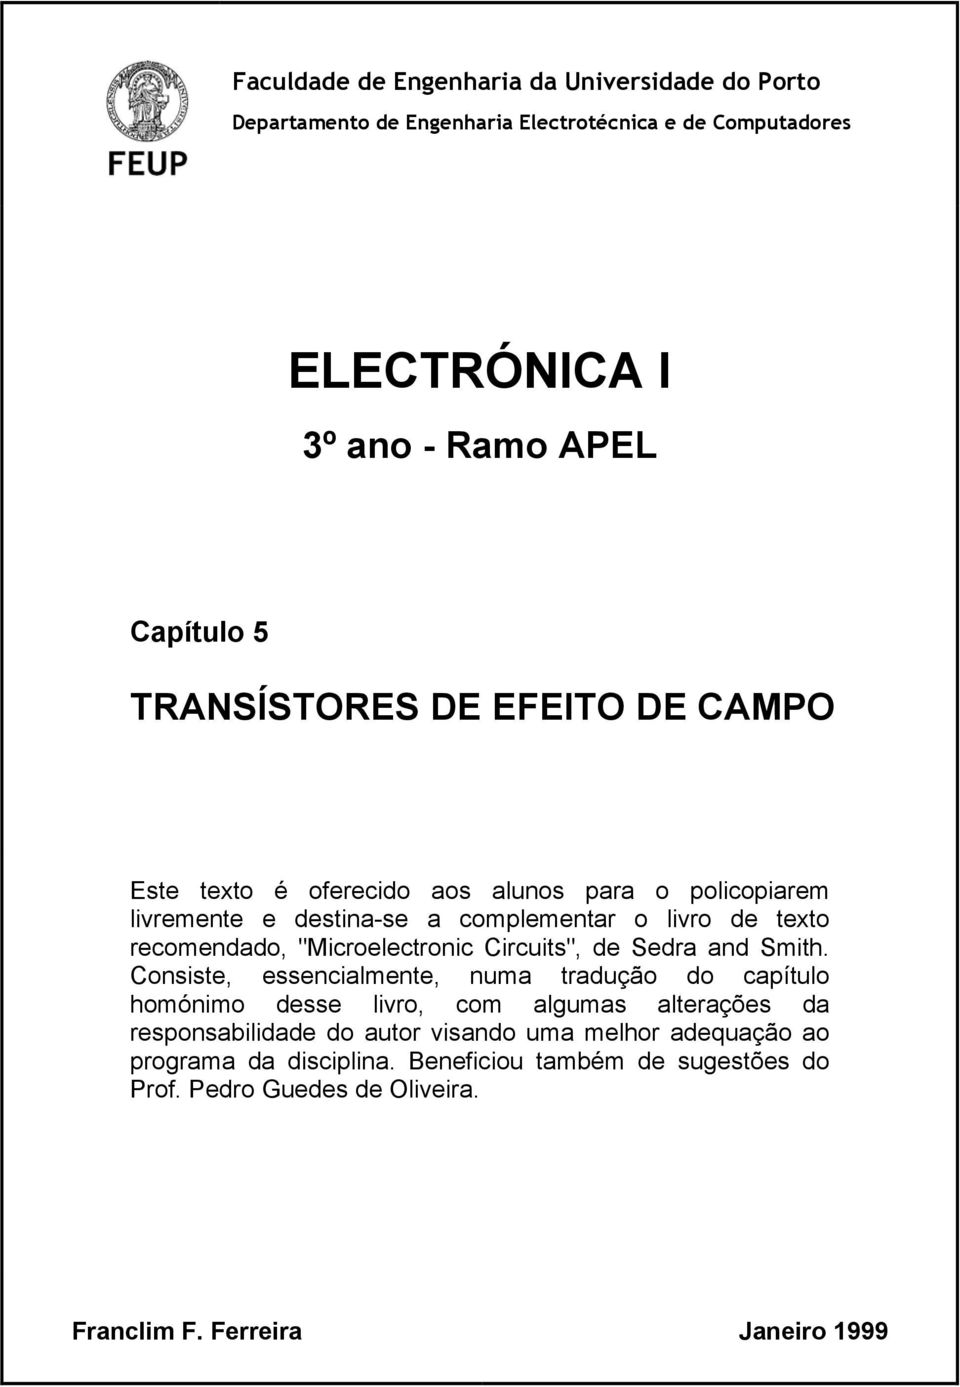 "Microelectronic Circuits", de Sedra and Smith.